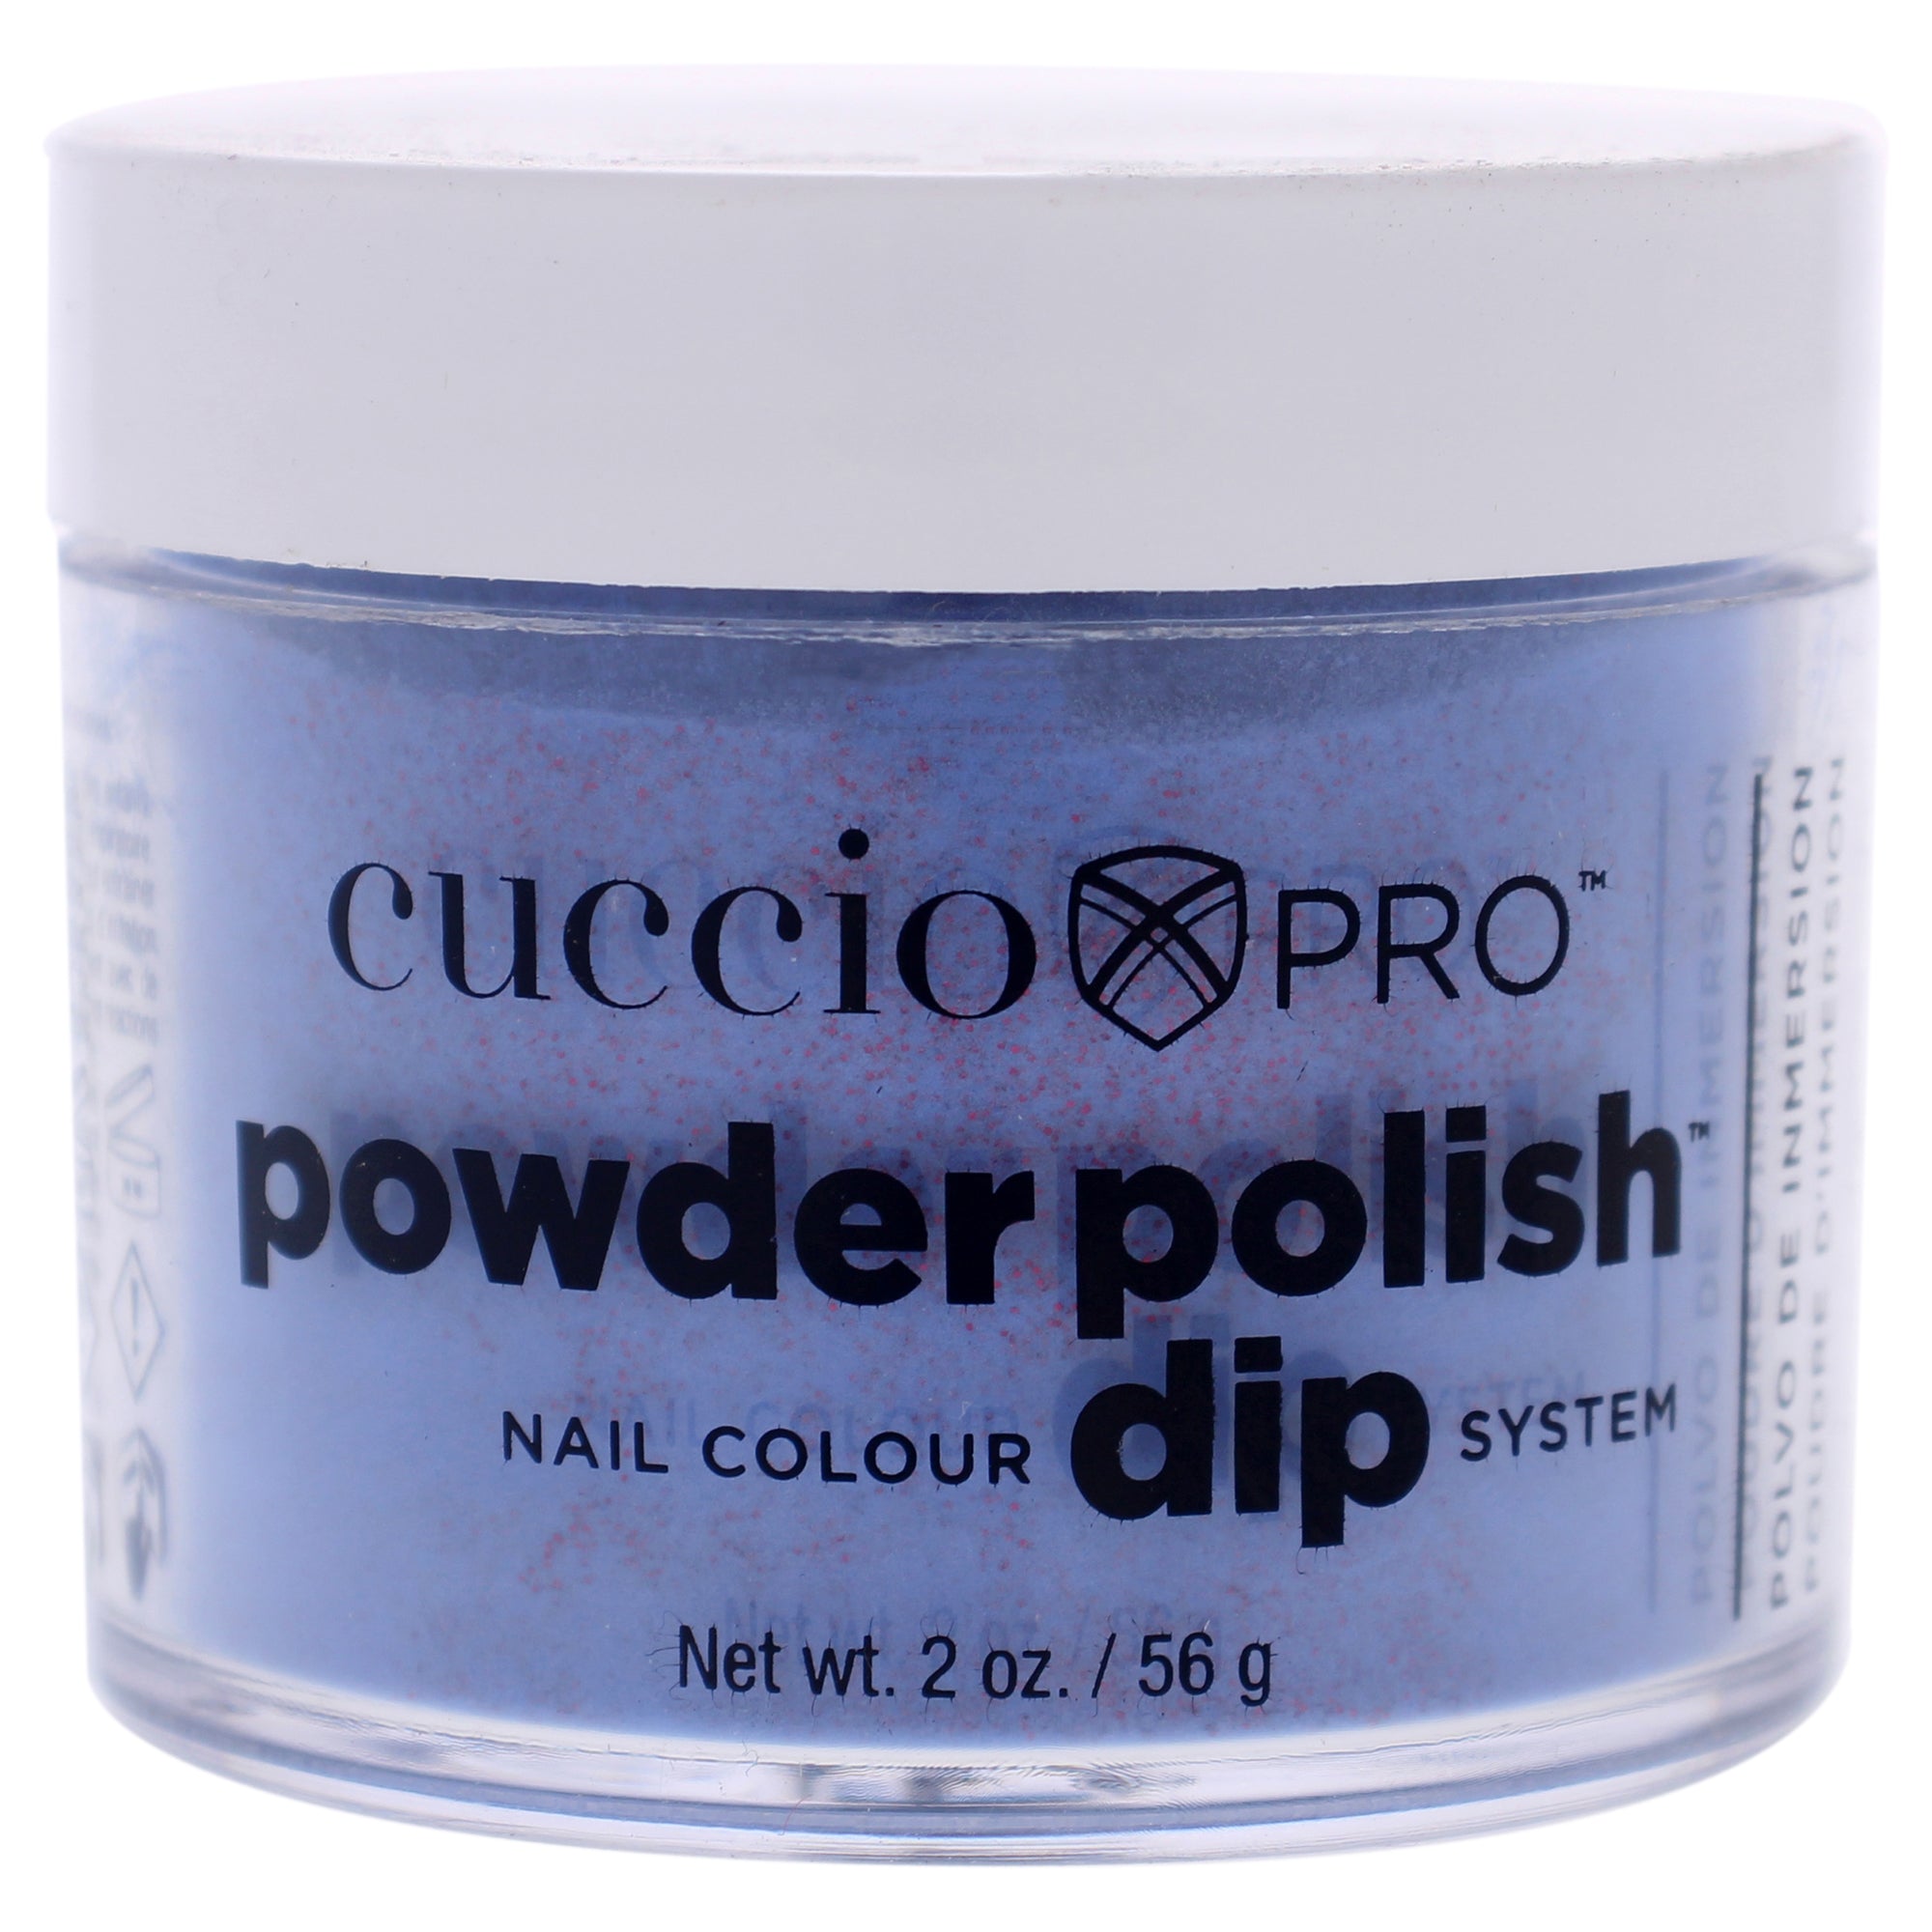 Pro Powder Polish Nail Colour Dip System - Purple With Red Glitter by Cuccio Colour for Women - 1.6 oz Nail Powder